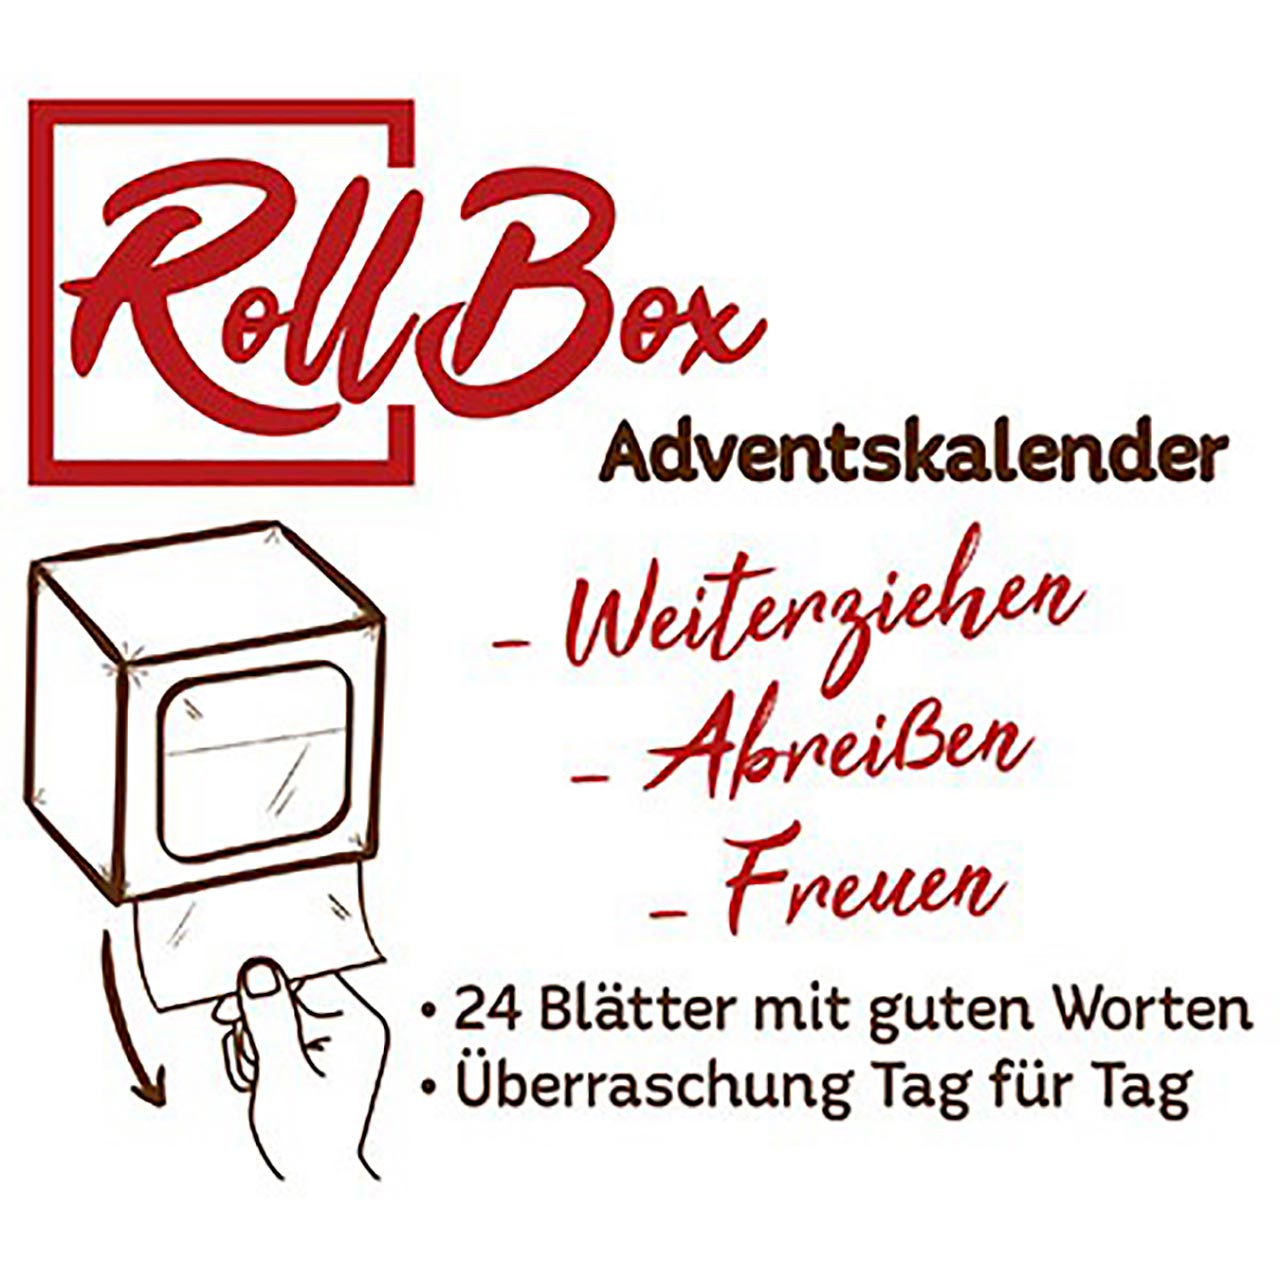 Gesegneten Advent - Roll-Box Adventskalender